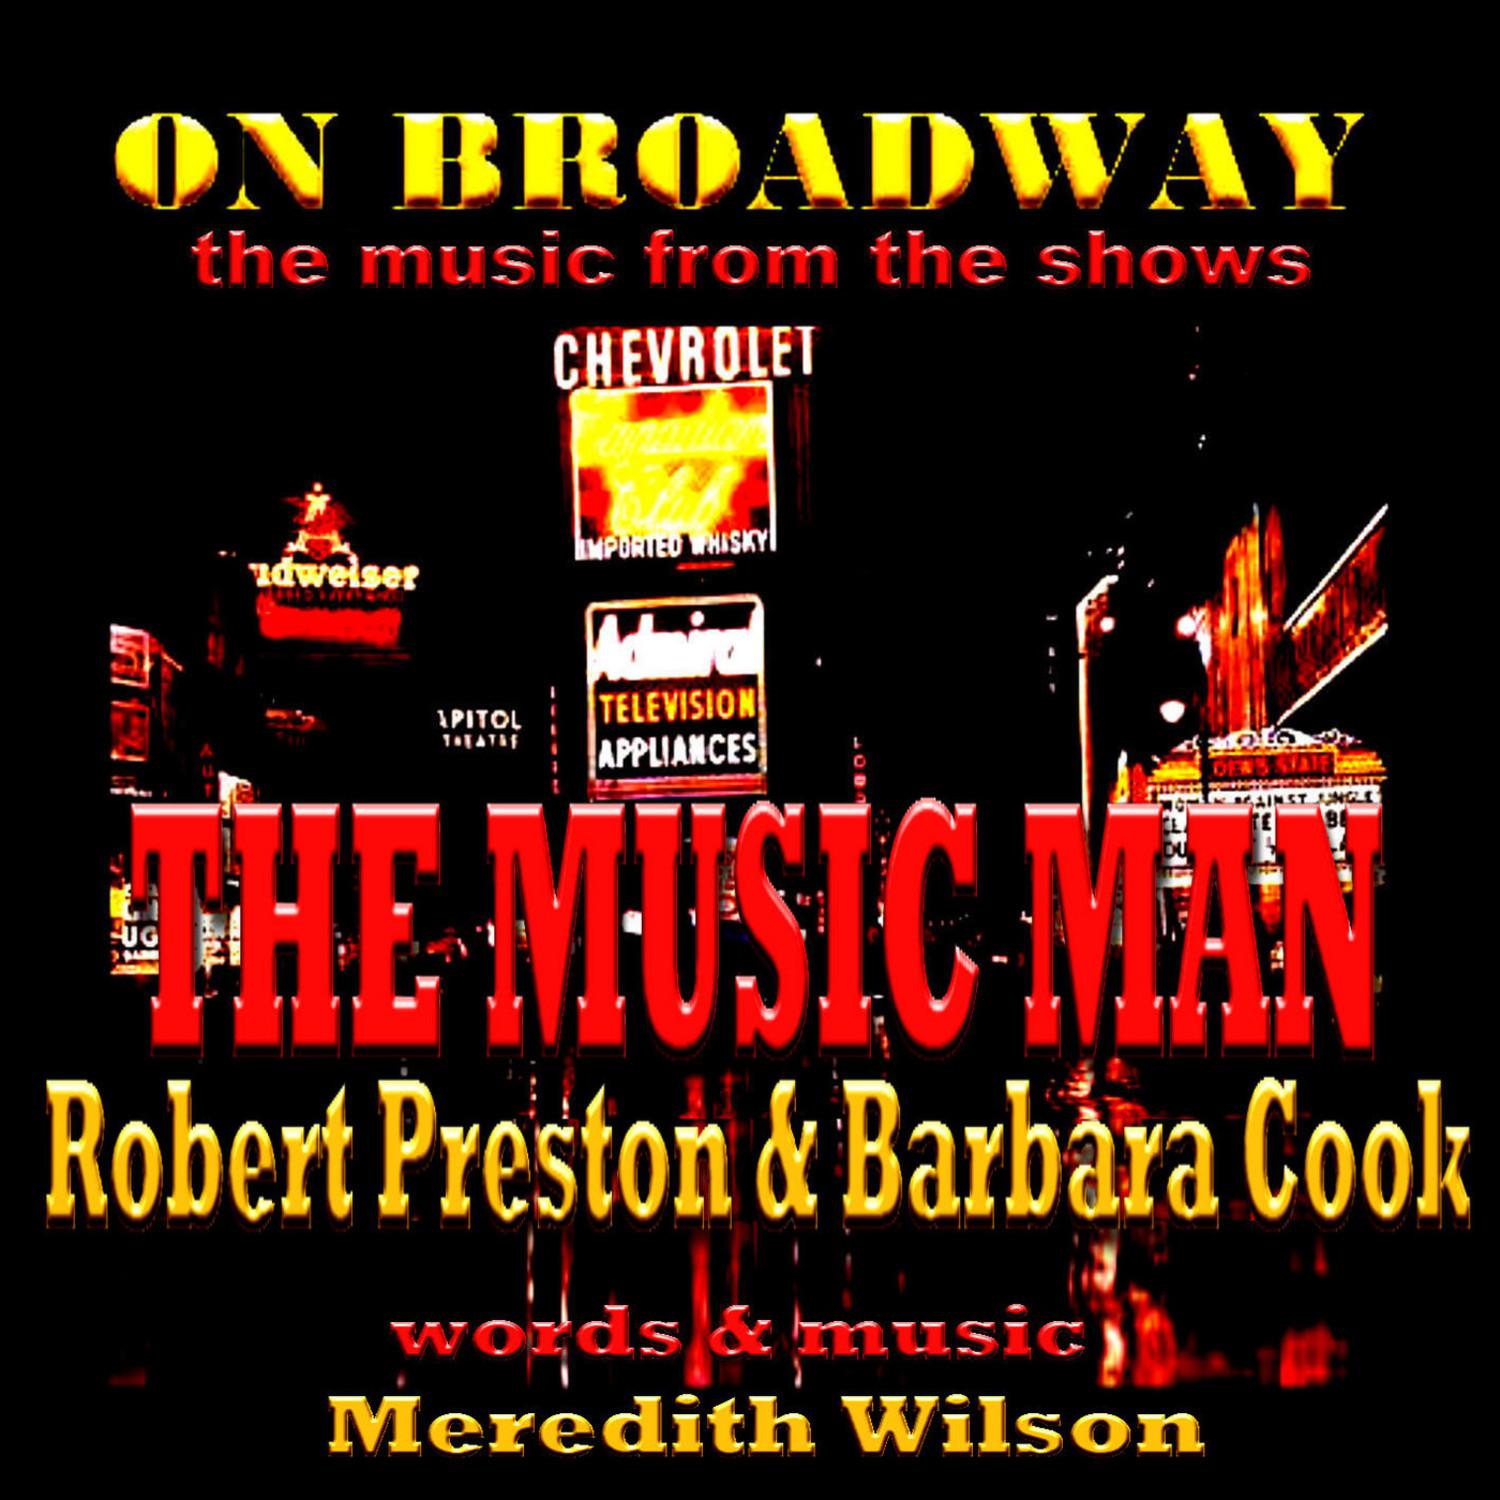 The Music Man - On Broadway